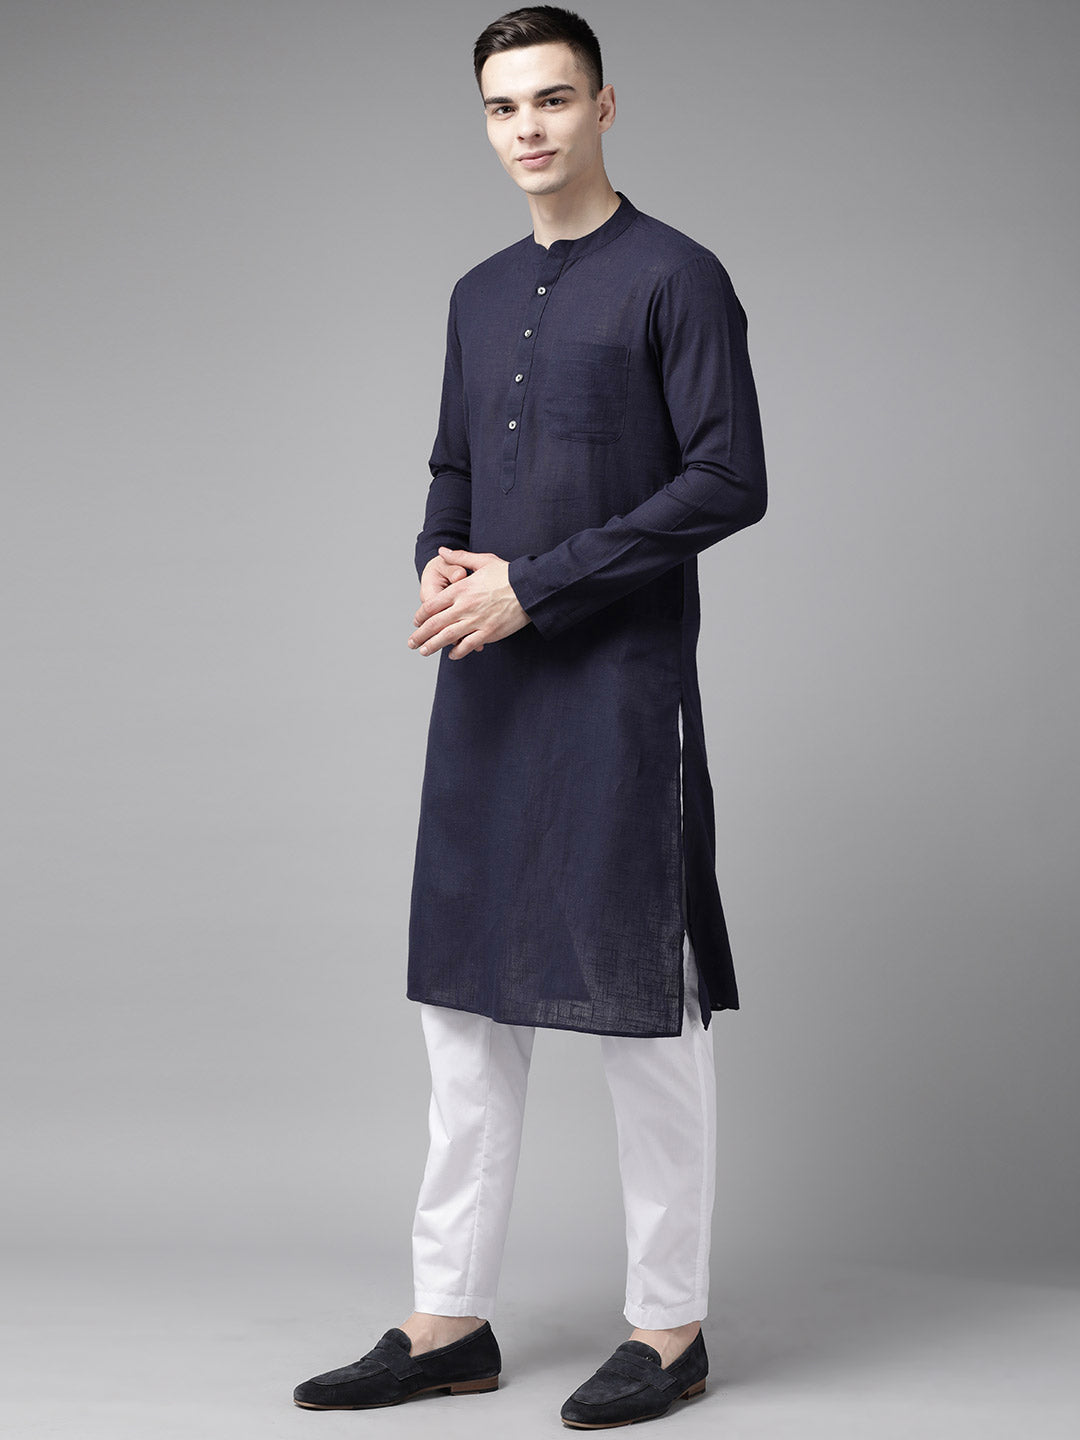 Men Blue And Beige Printed Pure Cotton Kurta Pajama With Neharu jacket